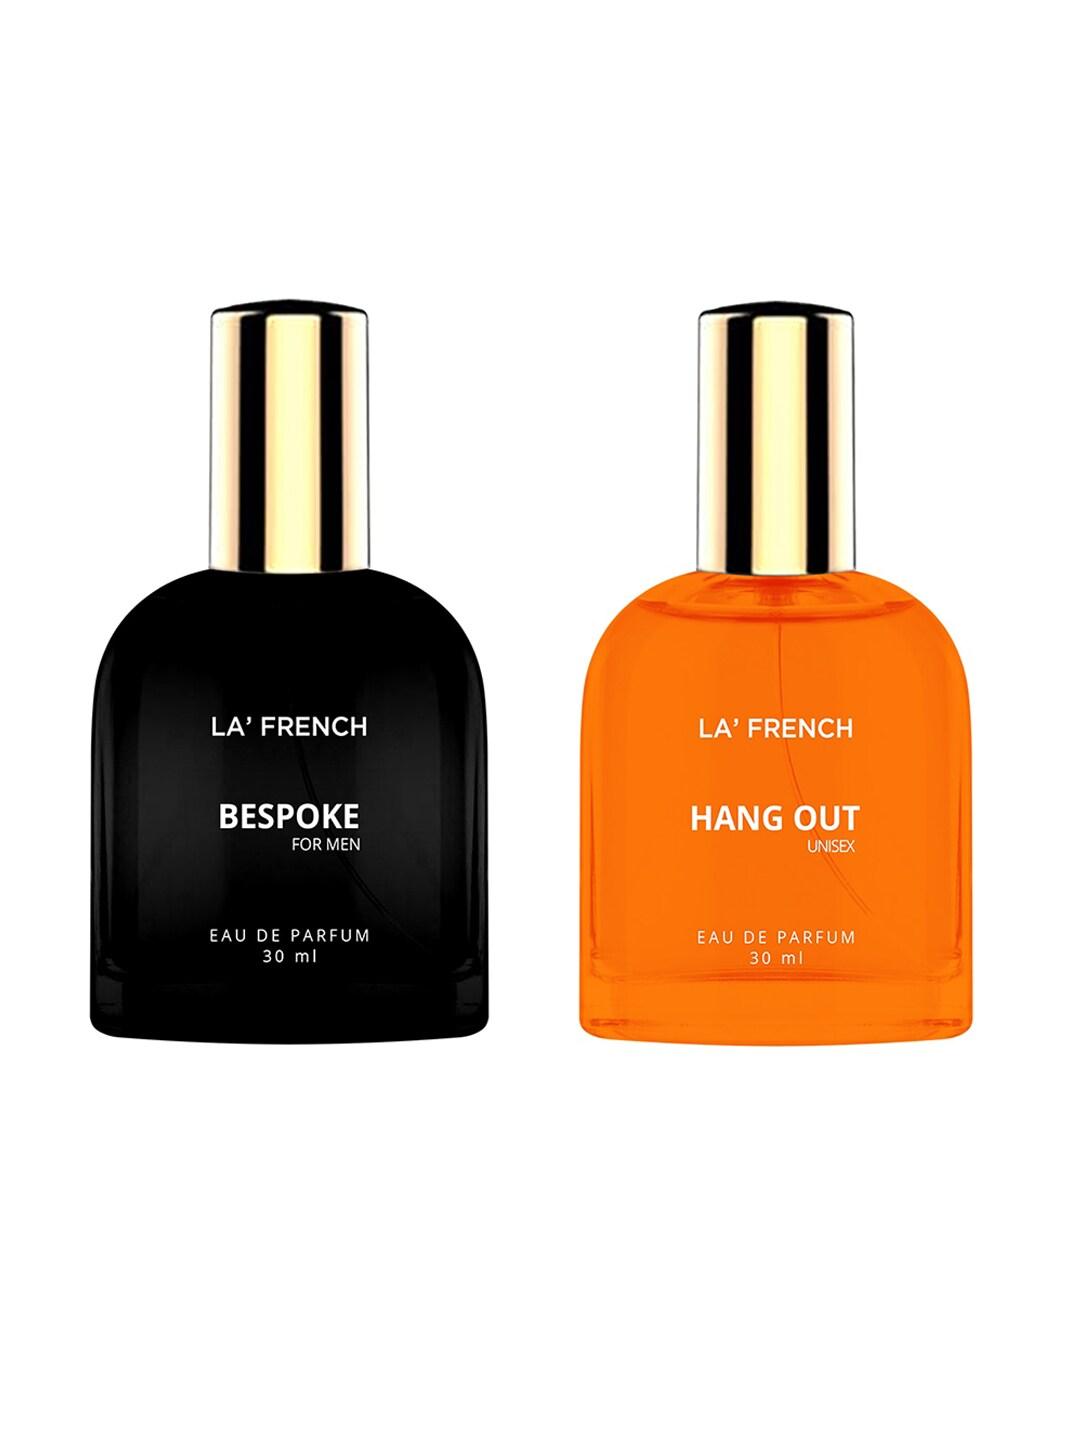 La French Set Of 2 Eau De Parfum 30ml Each - Bespoke & Hang Out